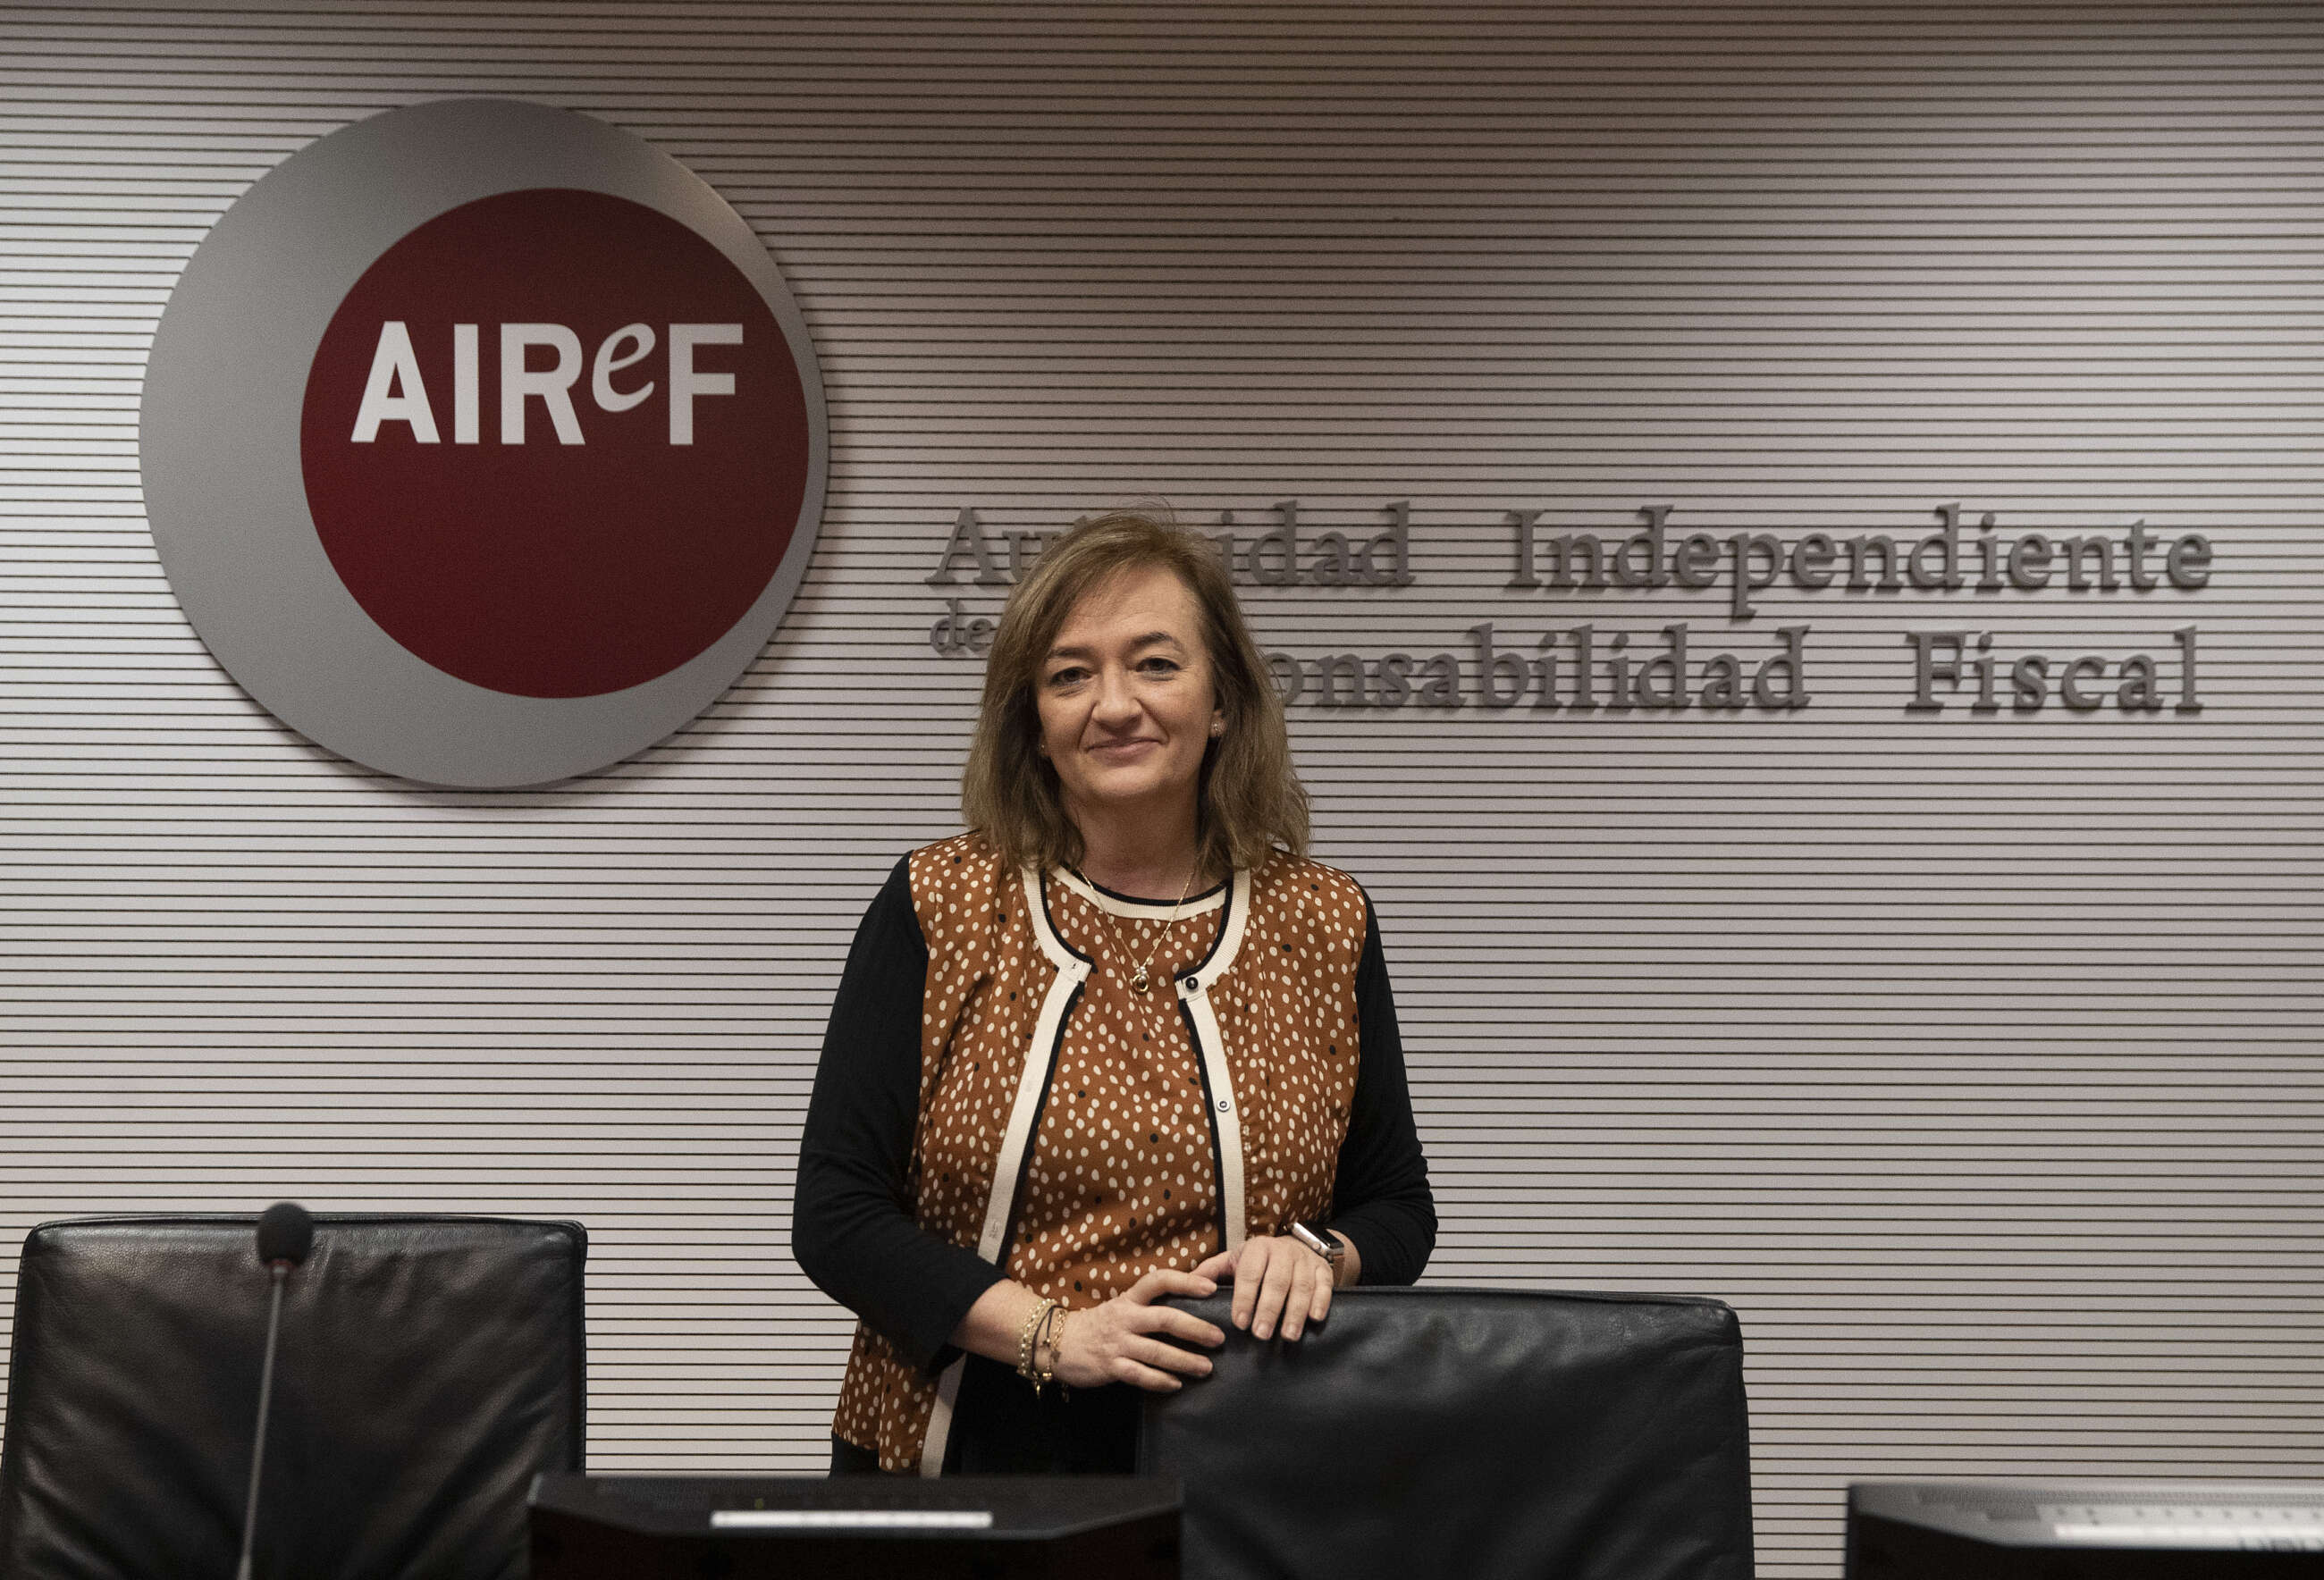 La presidenta Autoridad Independiente de Responsabilidad Fiscal (AIReF), Cristina Herrero. EFE/J.P. Gandul